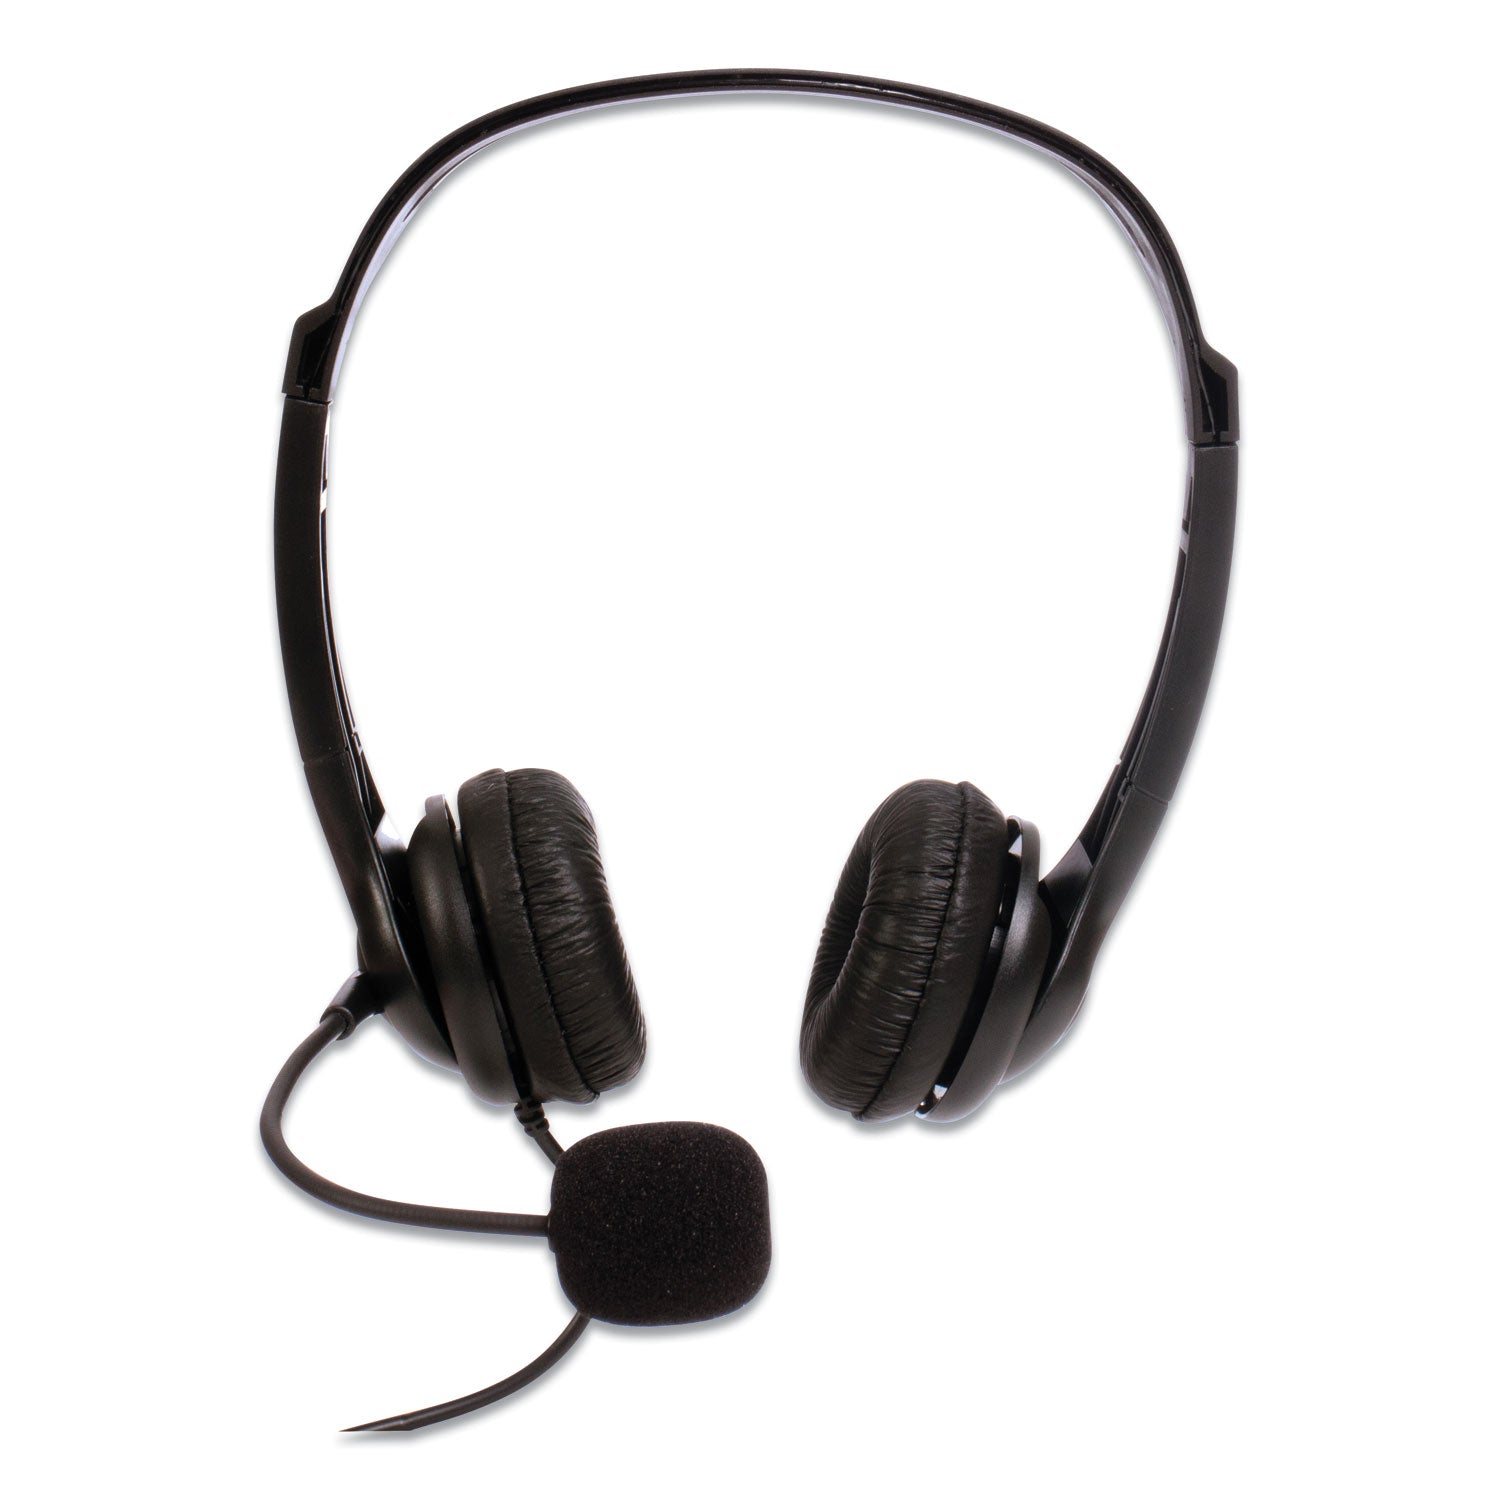 zum-zum350b-binaural-over-the-head-headset-black_sptzum350b - 3